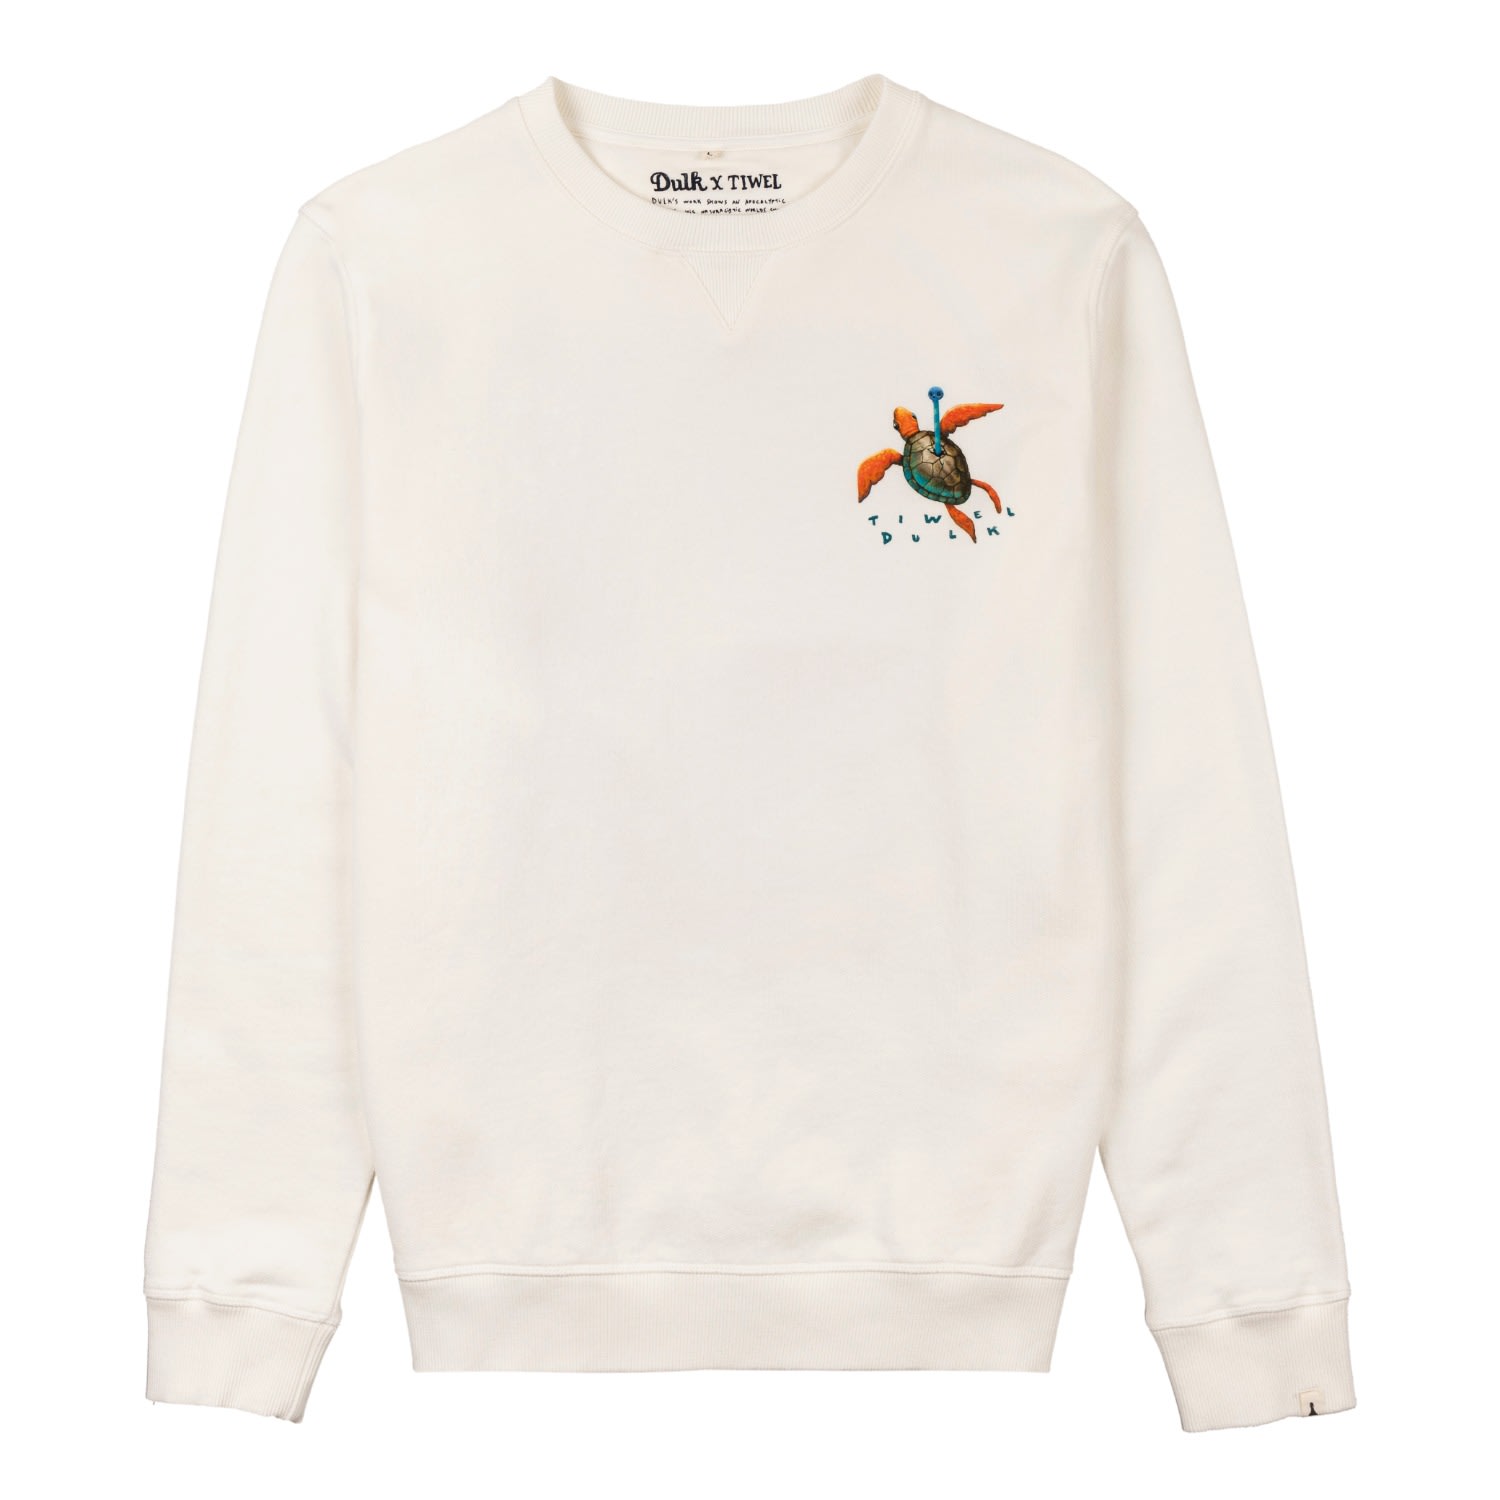 Men's White Dulk-Turtle Sweatshirt Small TIWEL